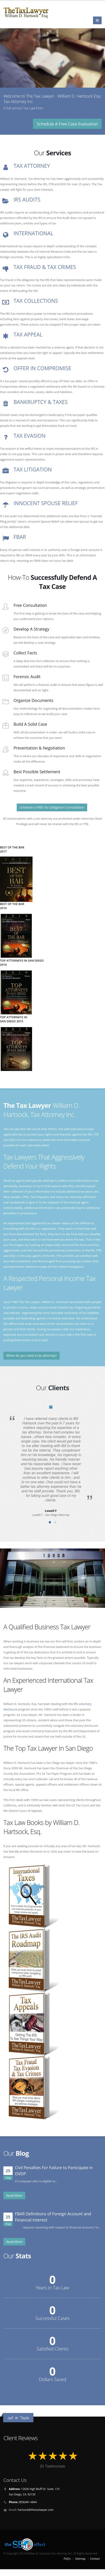 The Tax Lawyer - William D. Hartsock, Tax Attorney Inc. - San Diego CA Lawyers